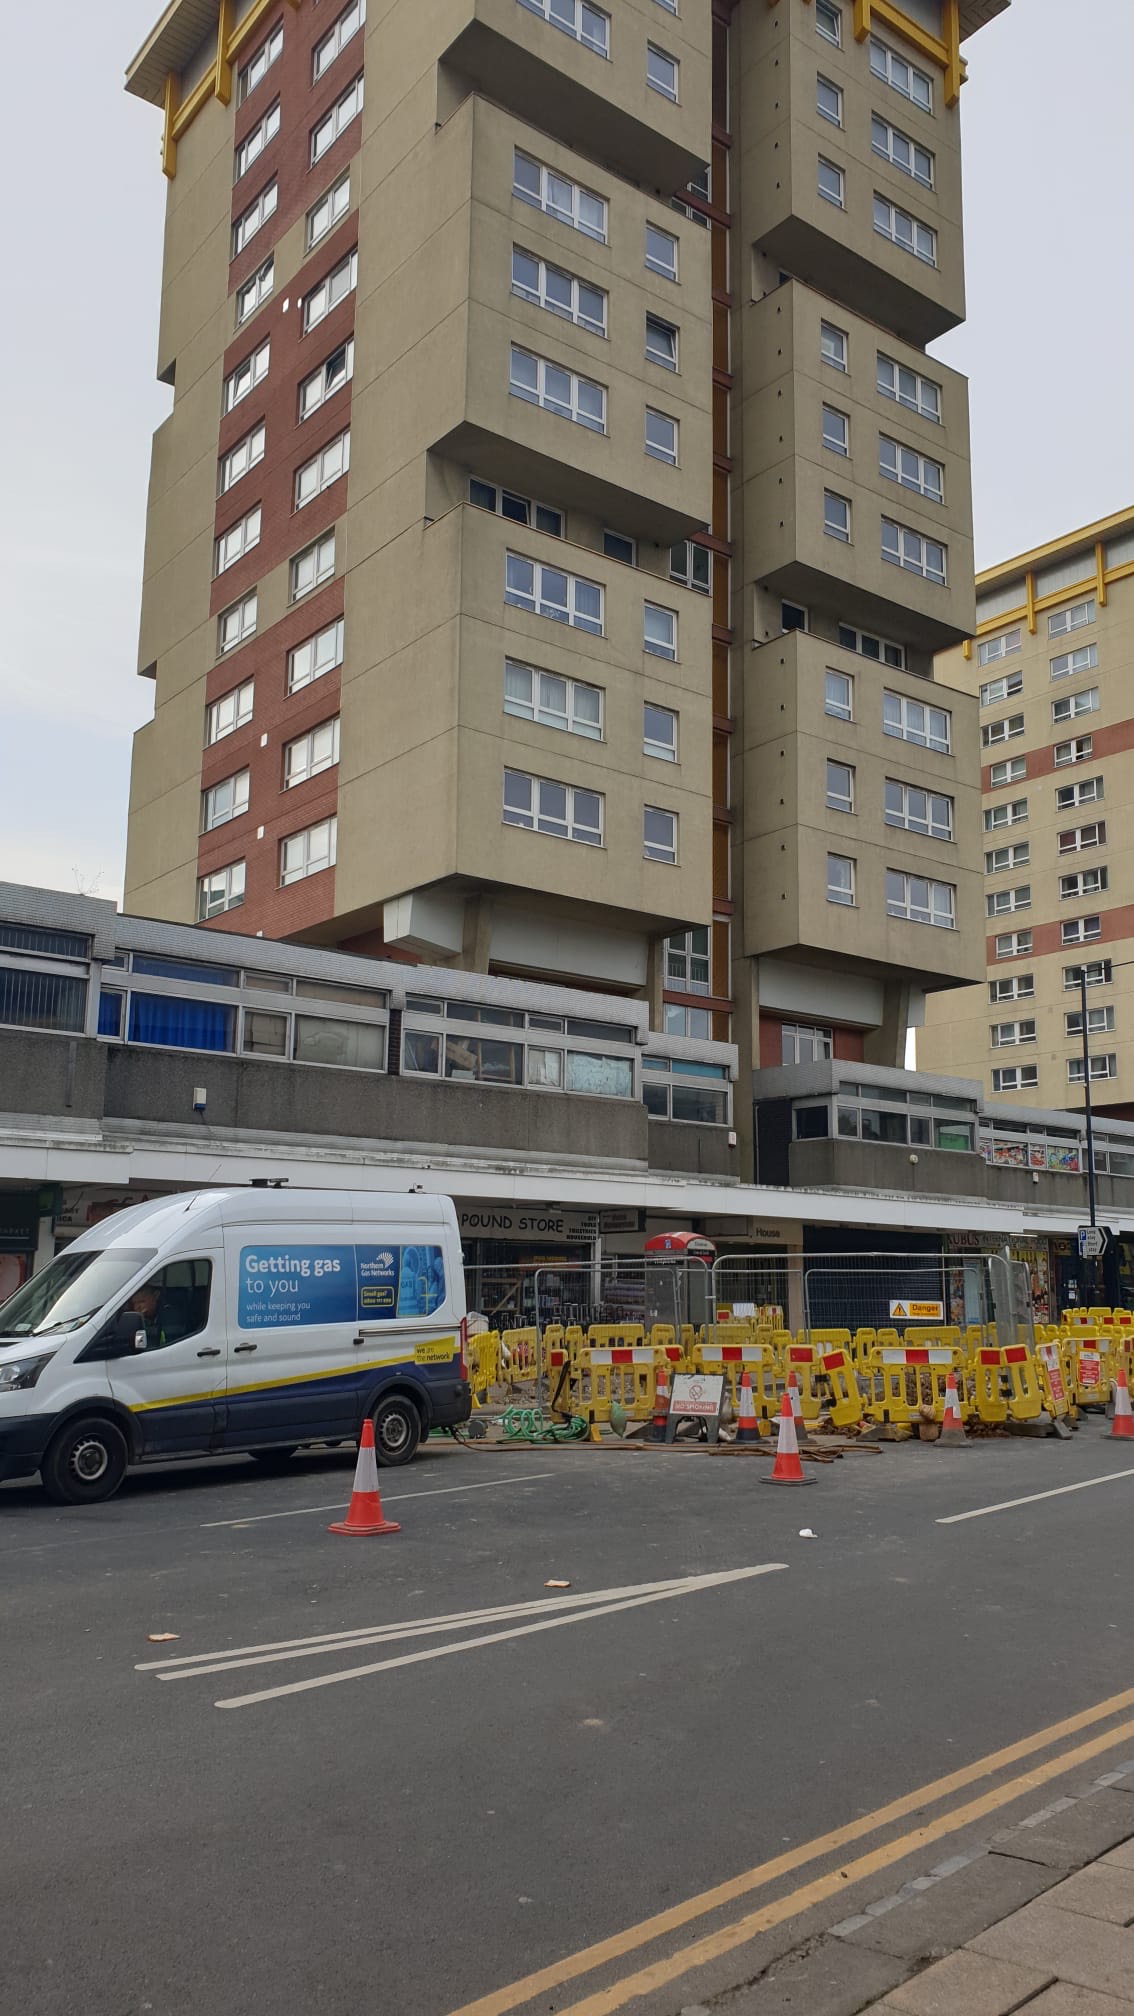 Major gas leak at flats in Wakefield